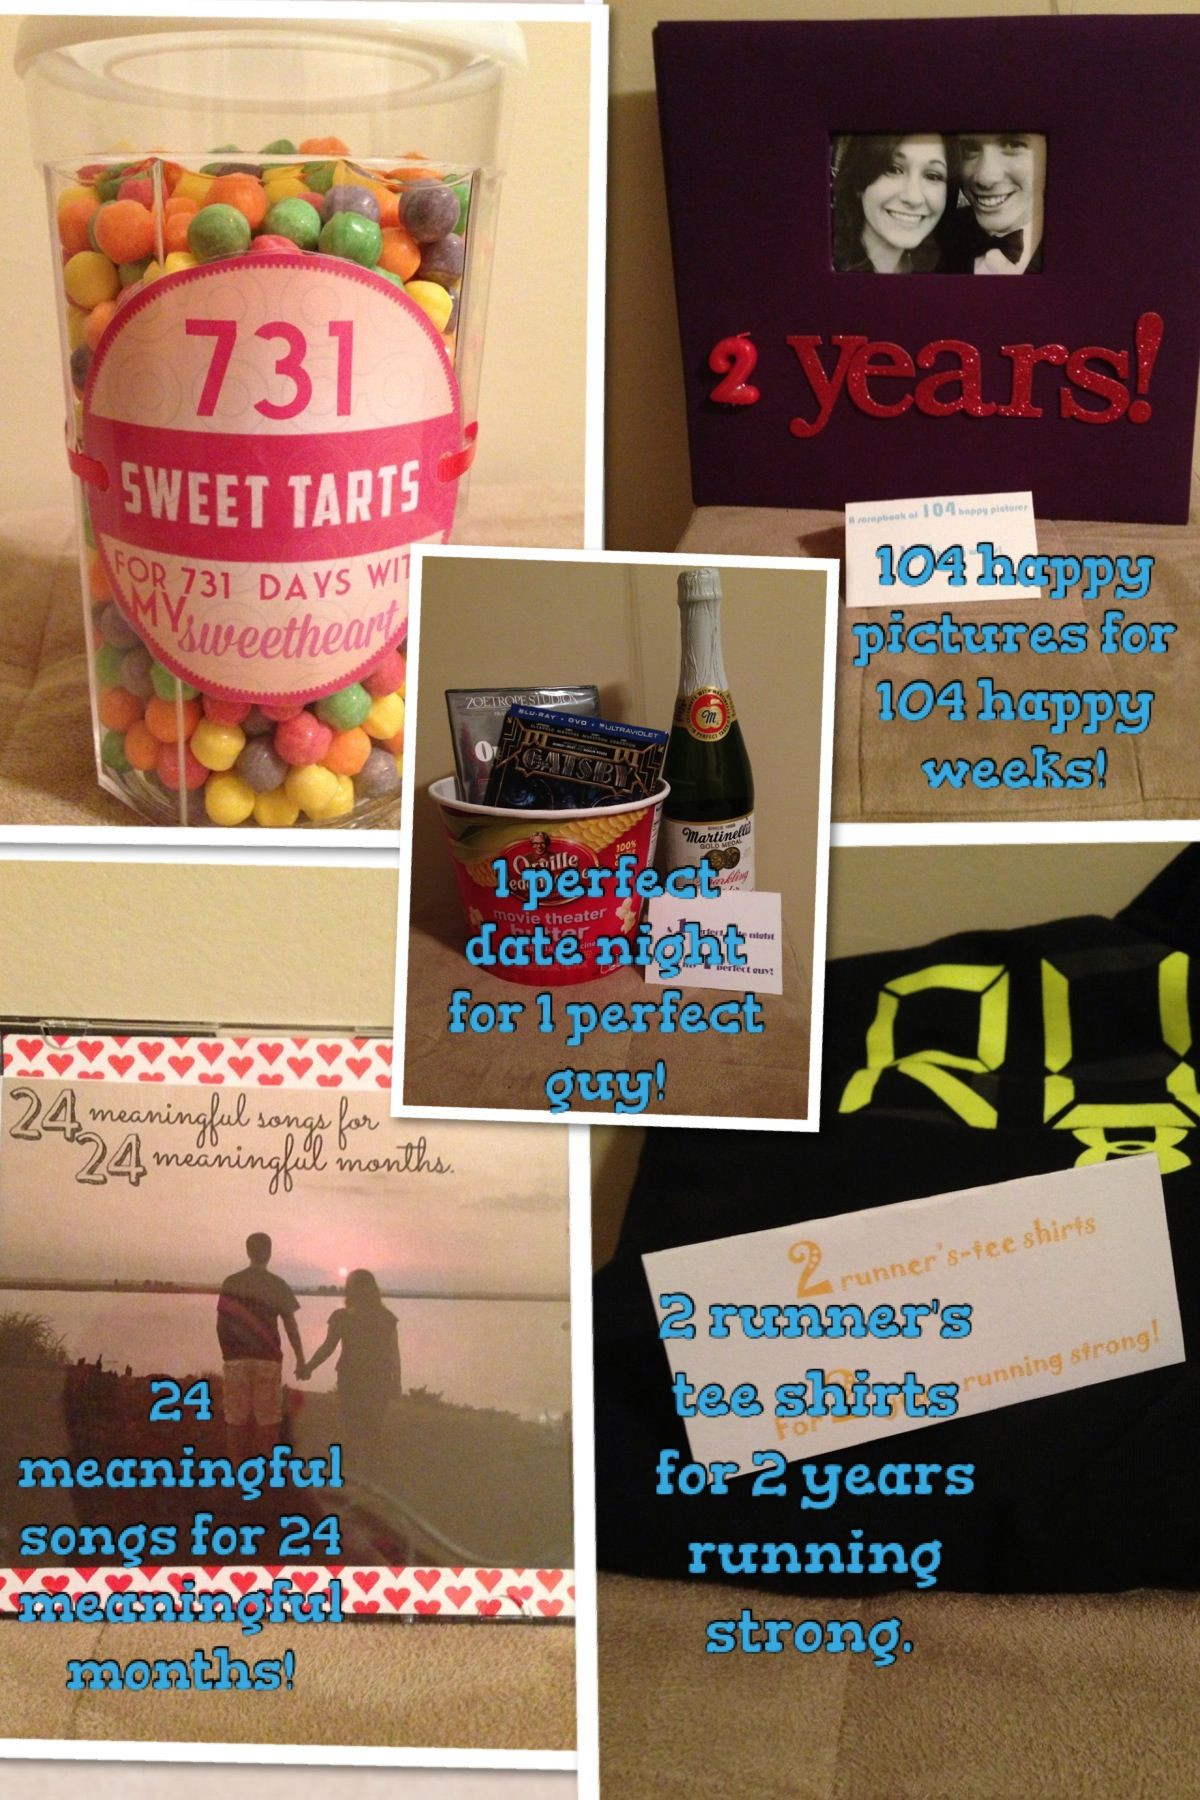 One Year Gift Ideas For Boyfriend
 2 year anniversary for my boyfriend